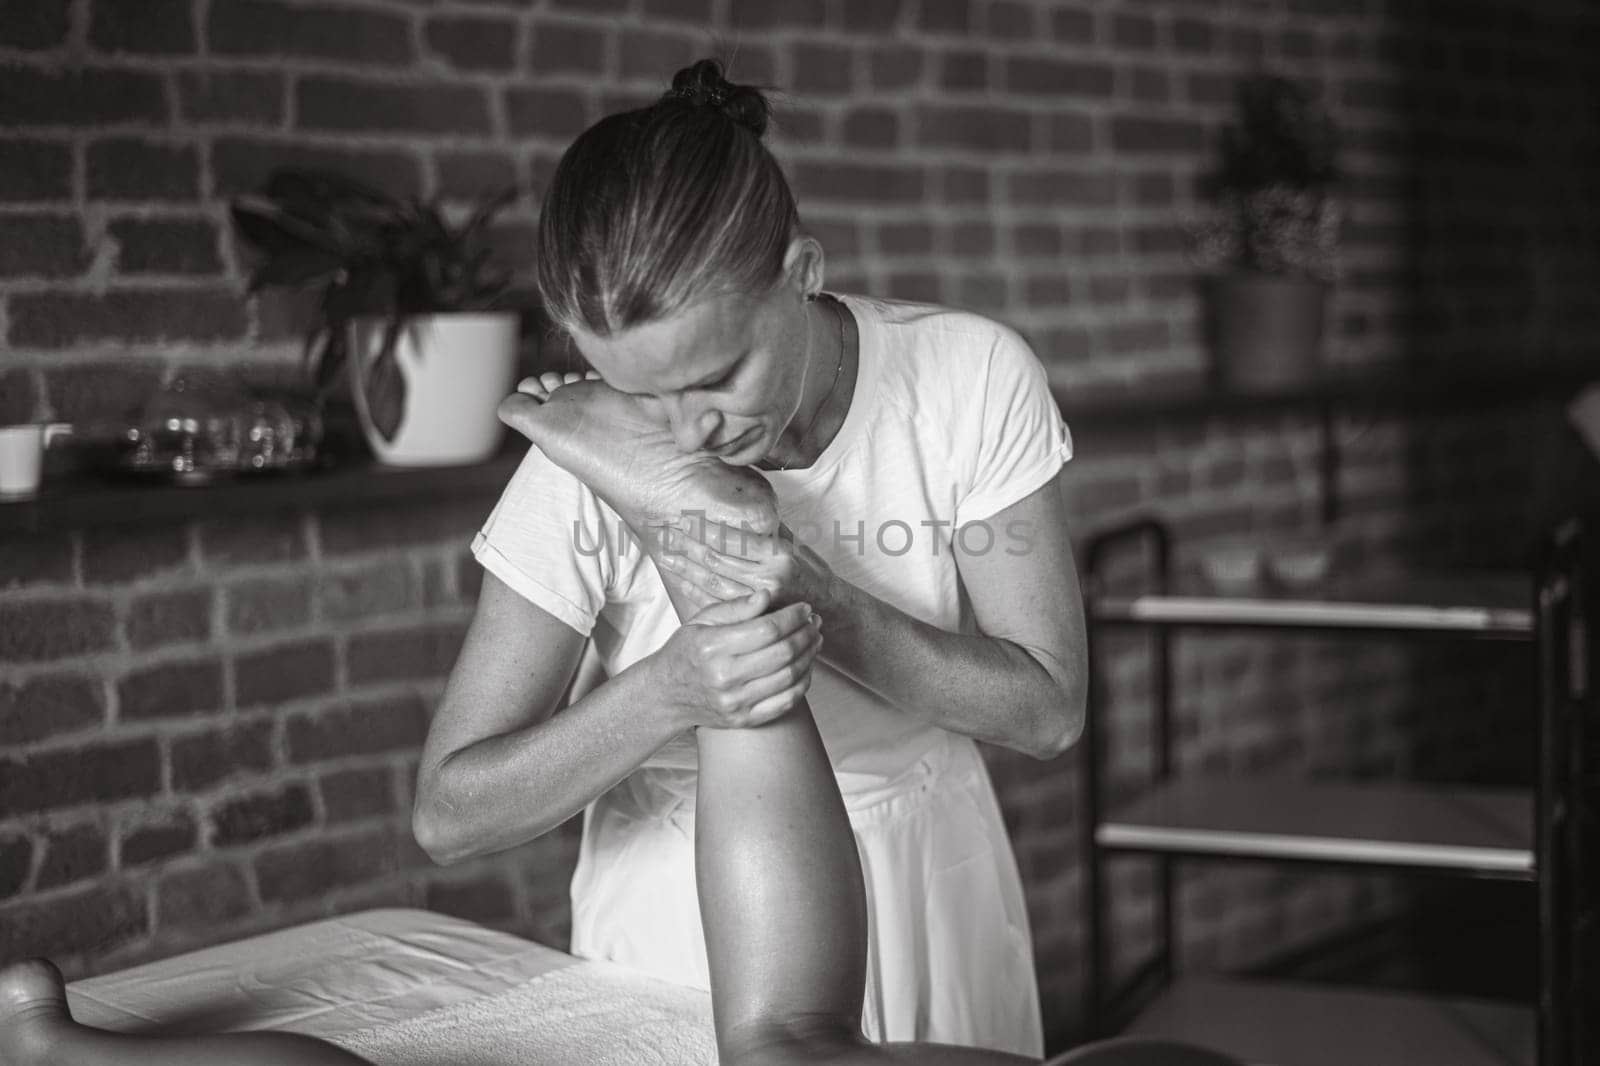 professional caucasian female physiotherapist masseuse performing leg massage to hispanic latino brunette woman in spa clinic